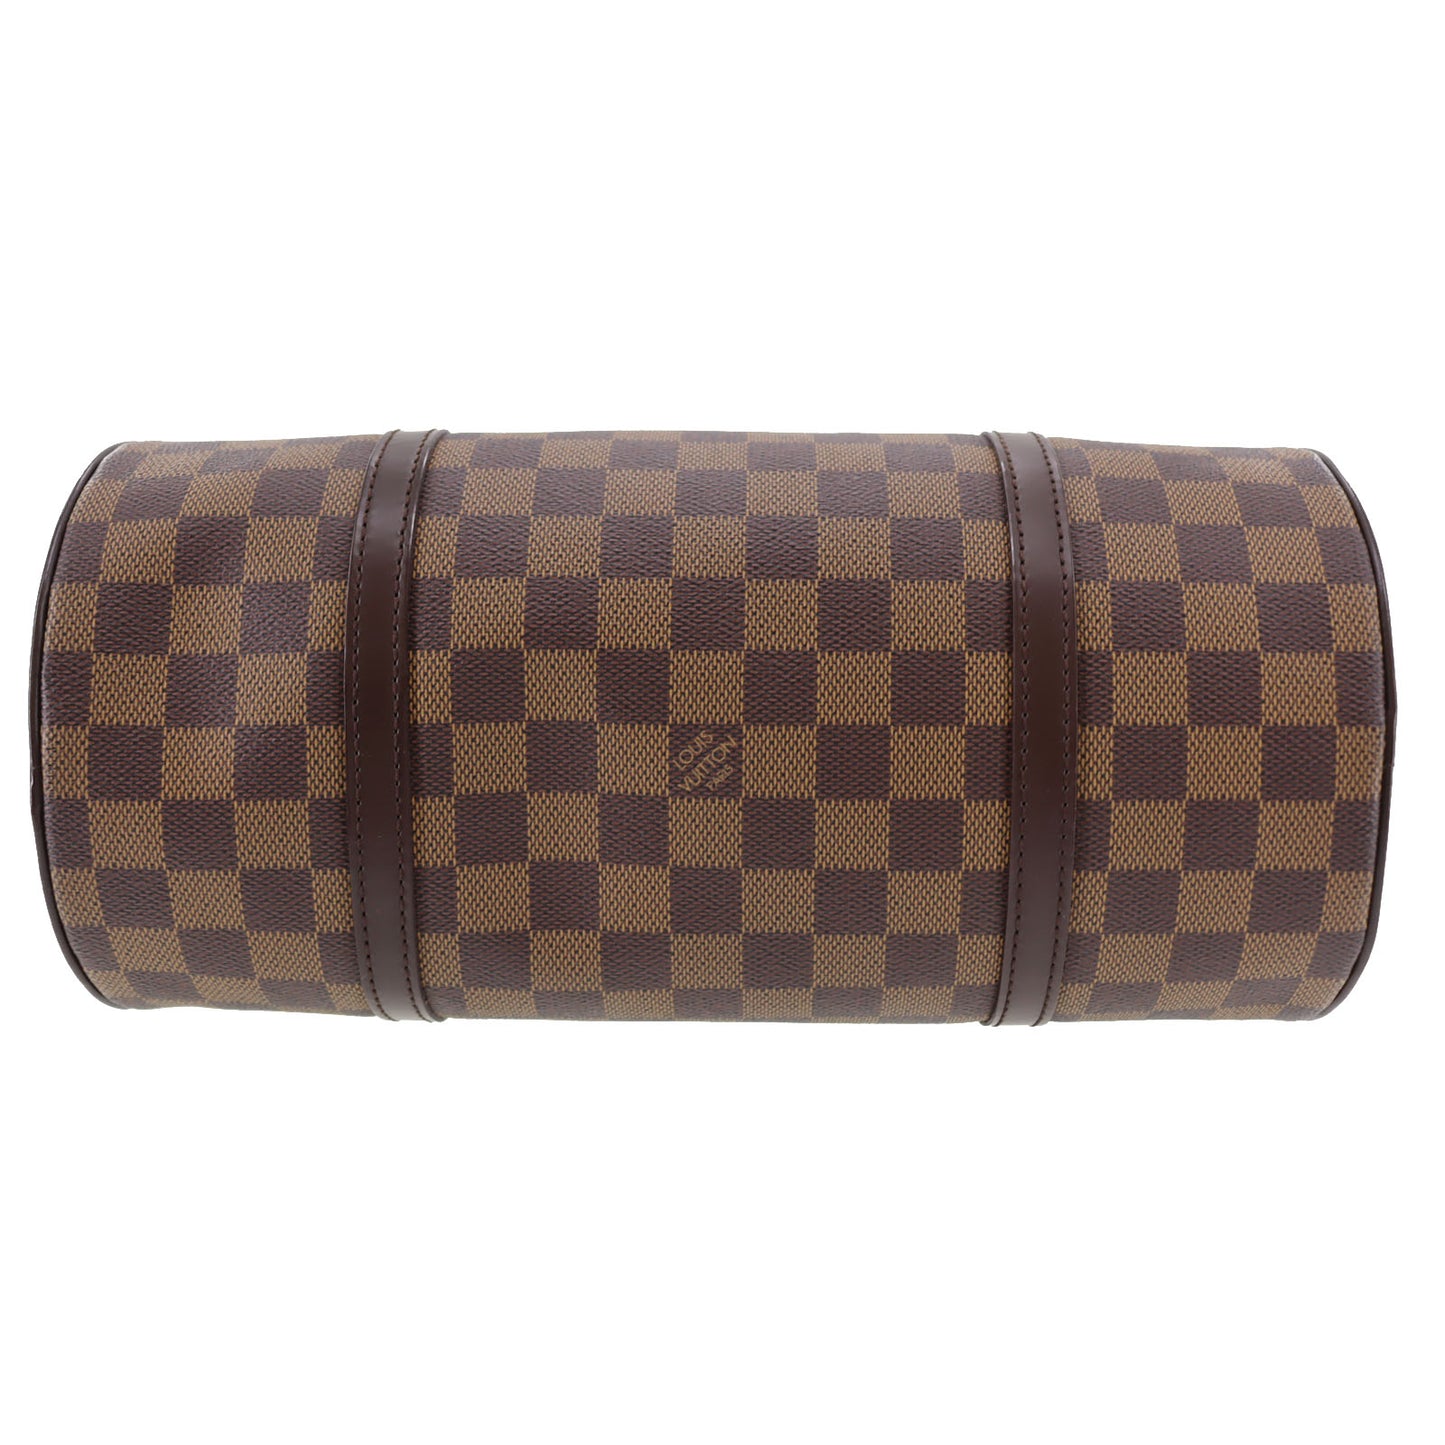 LOUIS VUITTON LV Papillon 30 Handbag Damier Leather N51303 #AG979